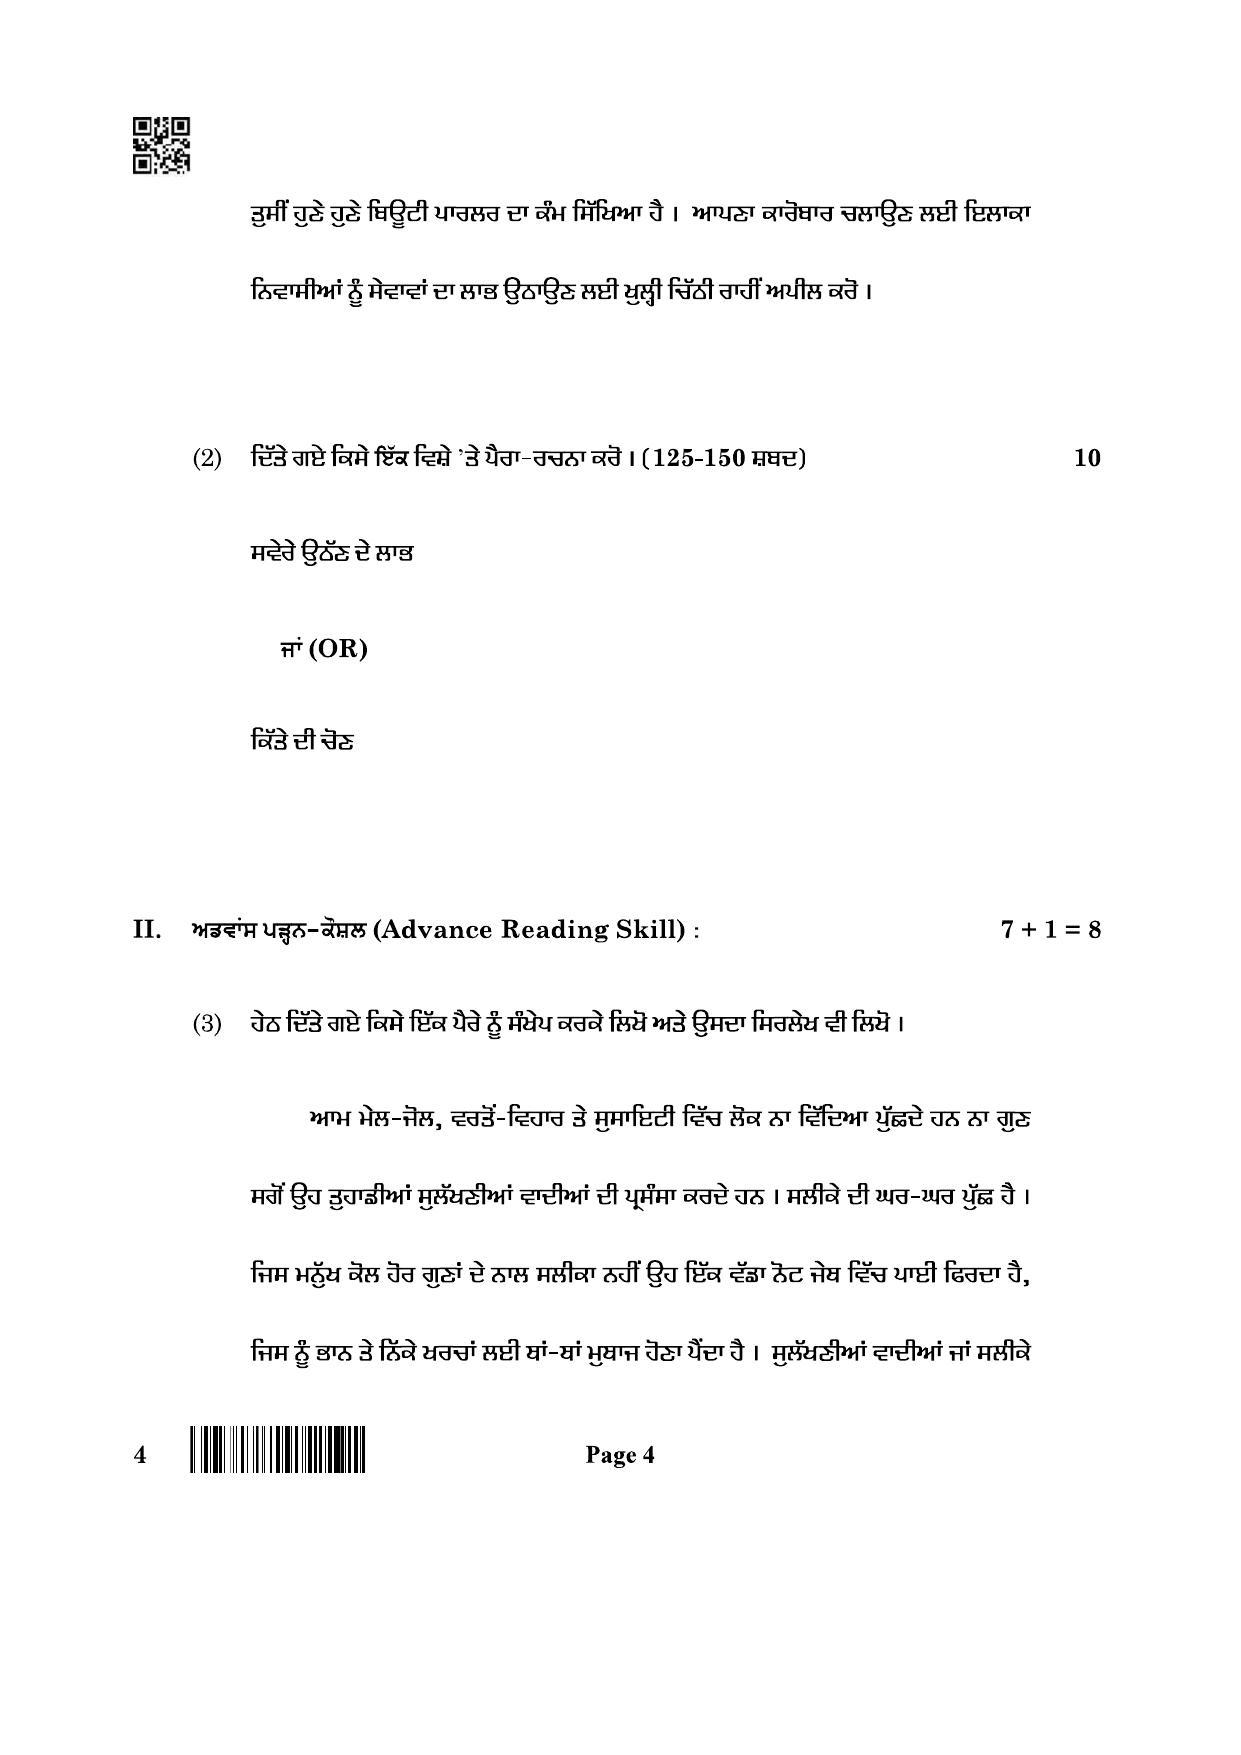 CBSE Class 12 4_Punjabi 2022 Question Paper - Page 4